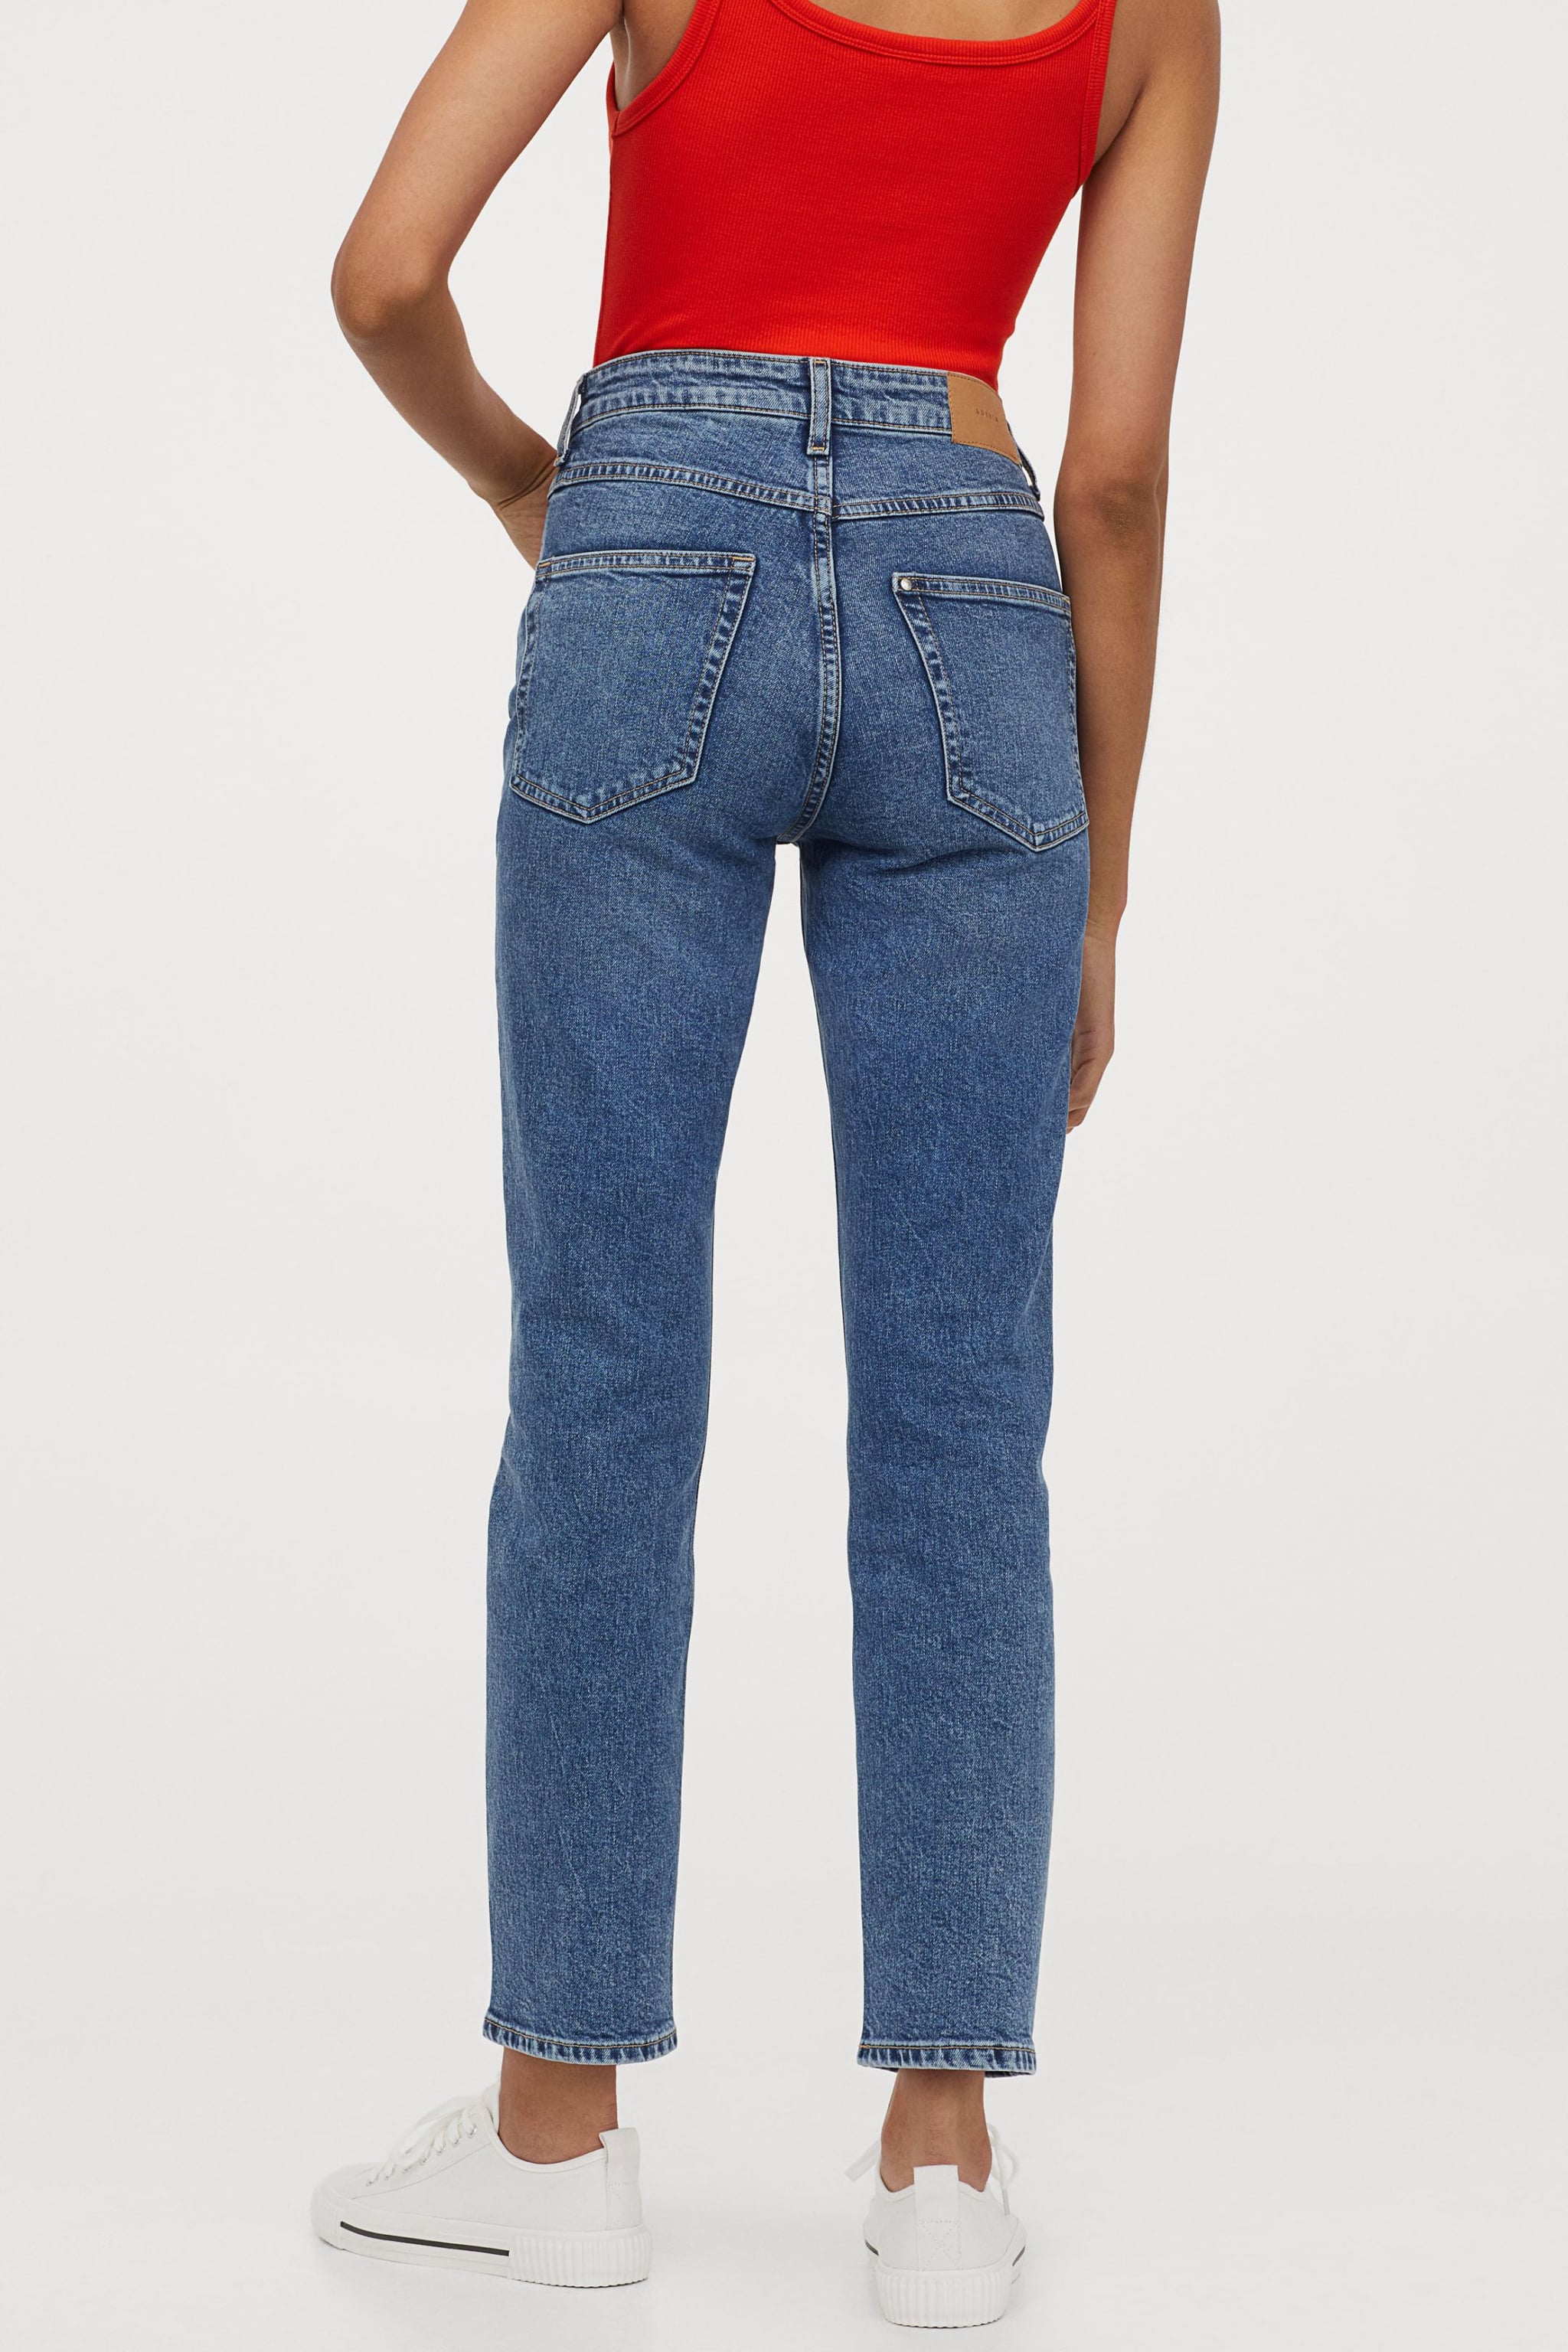 popular denim jeans